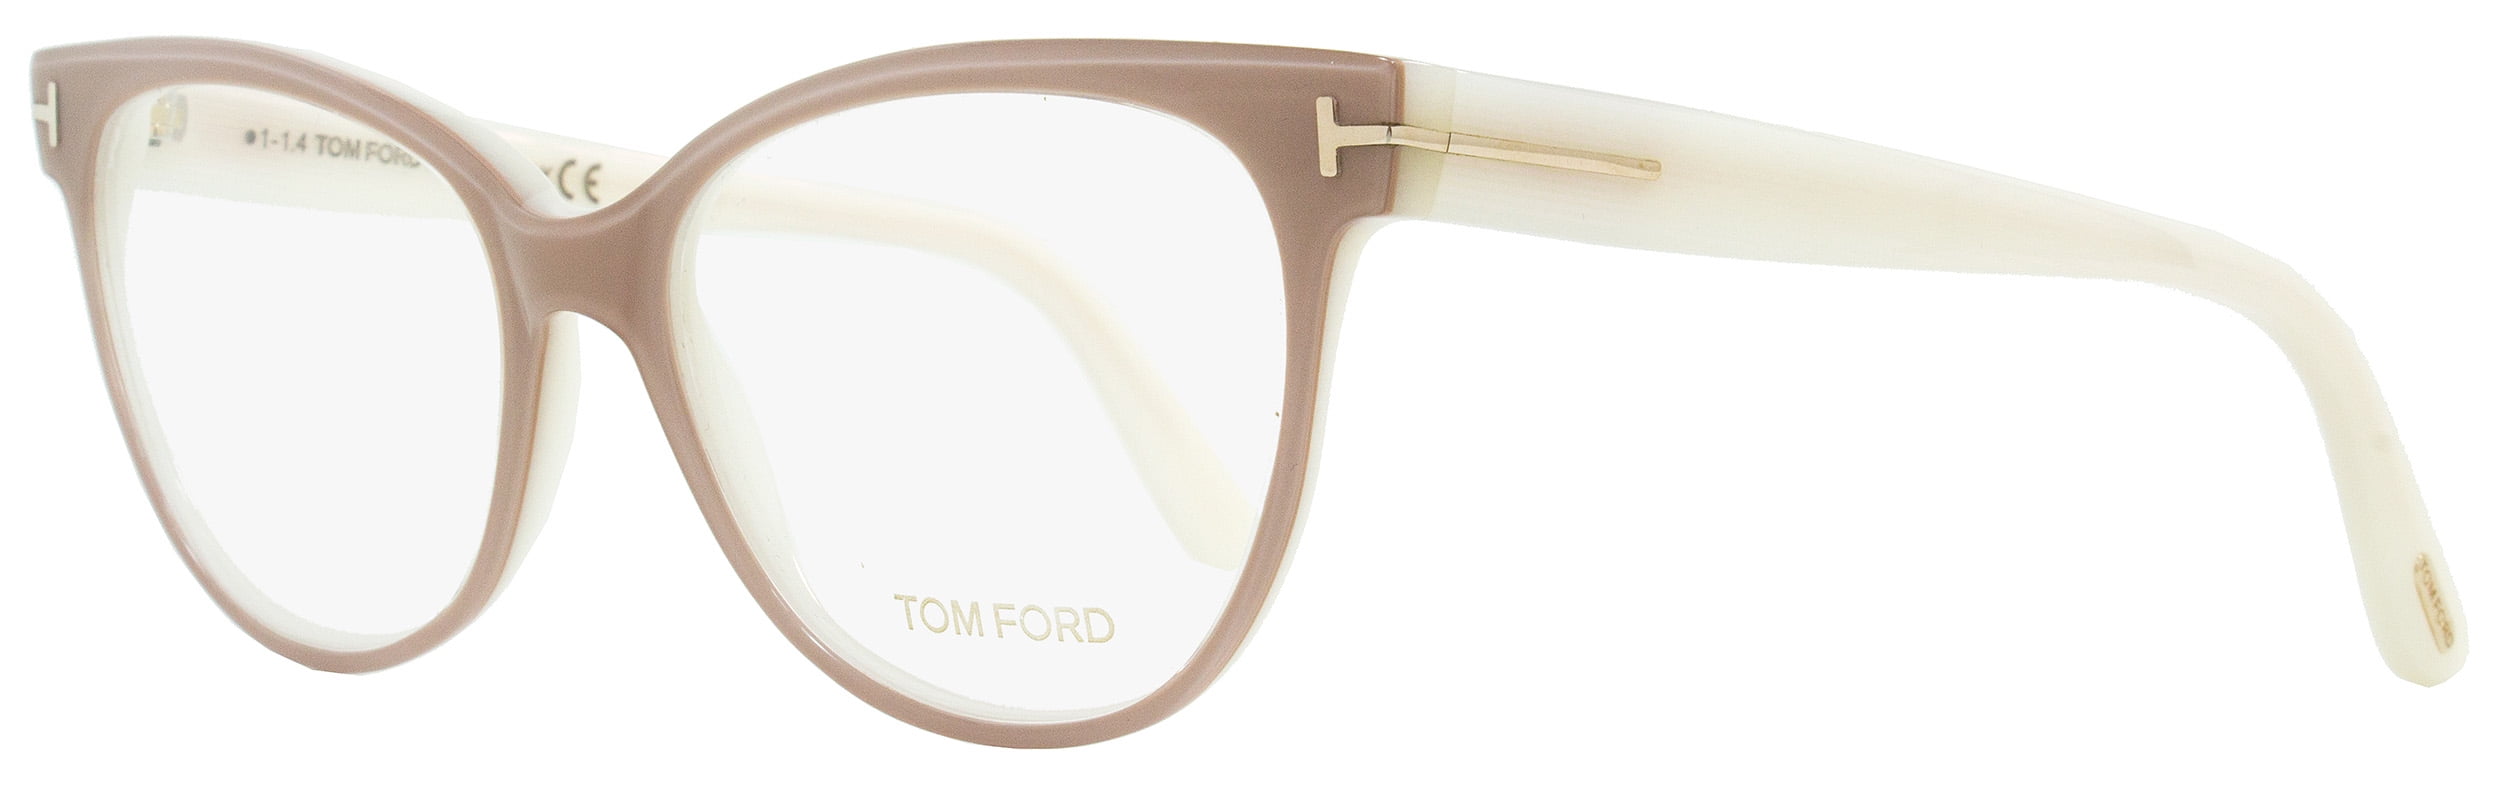 Tom Ford Cateye Eyeglasses TF5291 074 Size: 55mm Rose/Iridescent